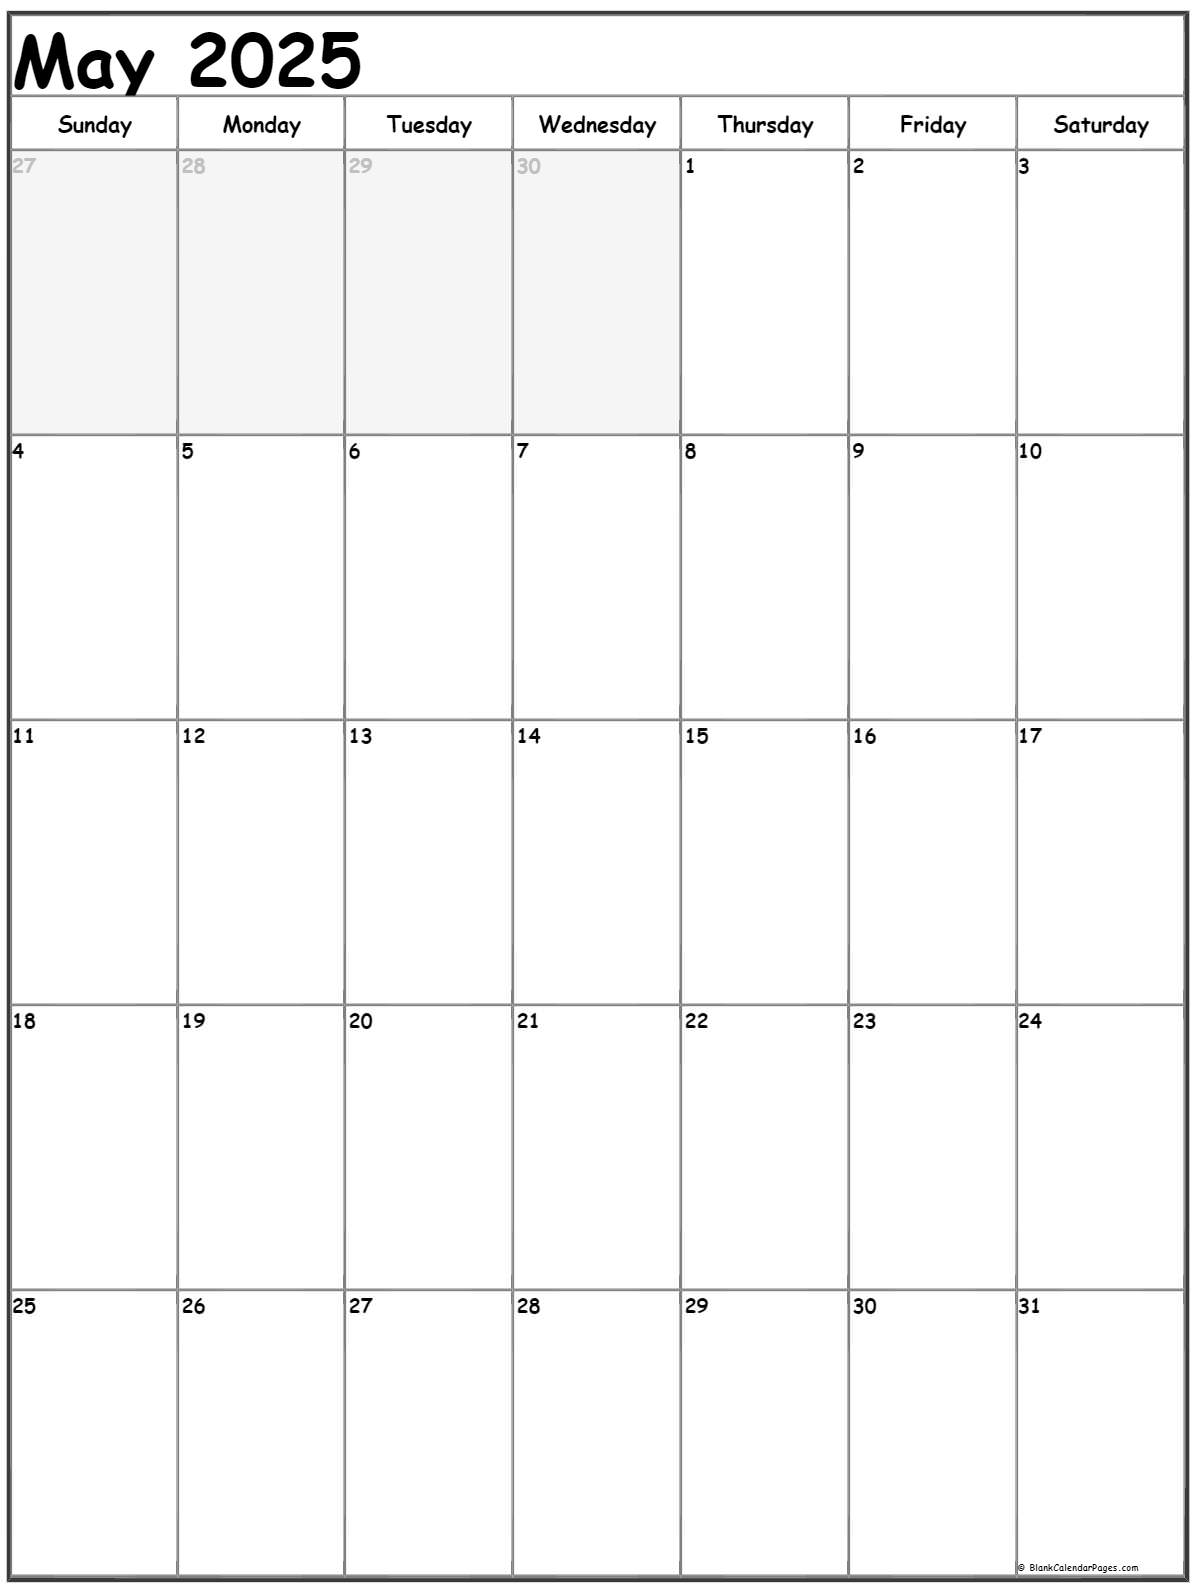 may-2025-vertical-calendar-portrait